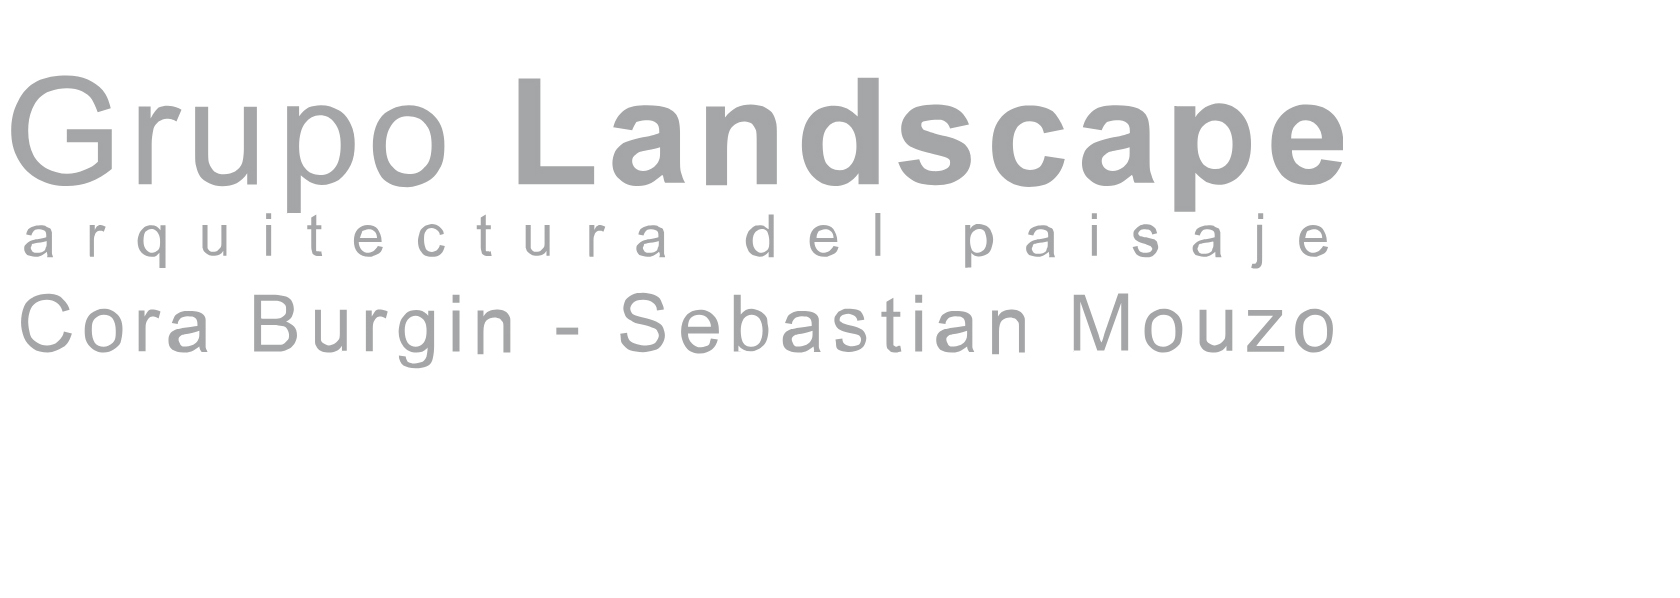 Grupo Landscape